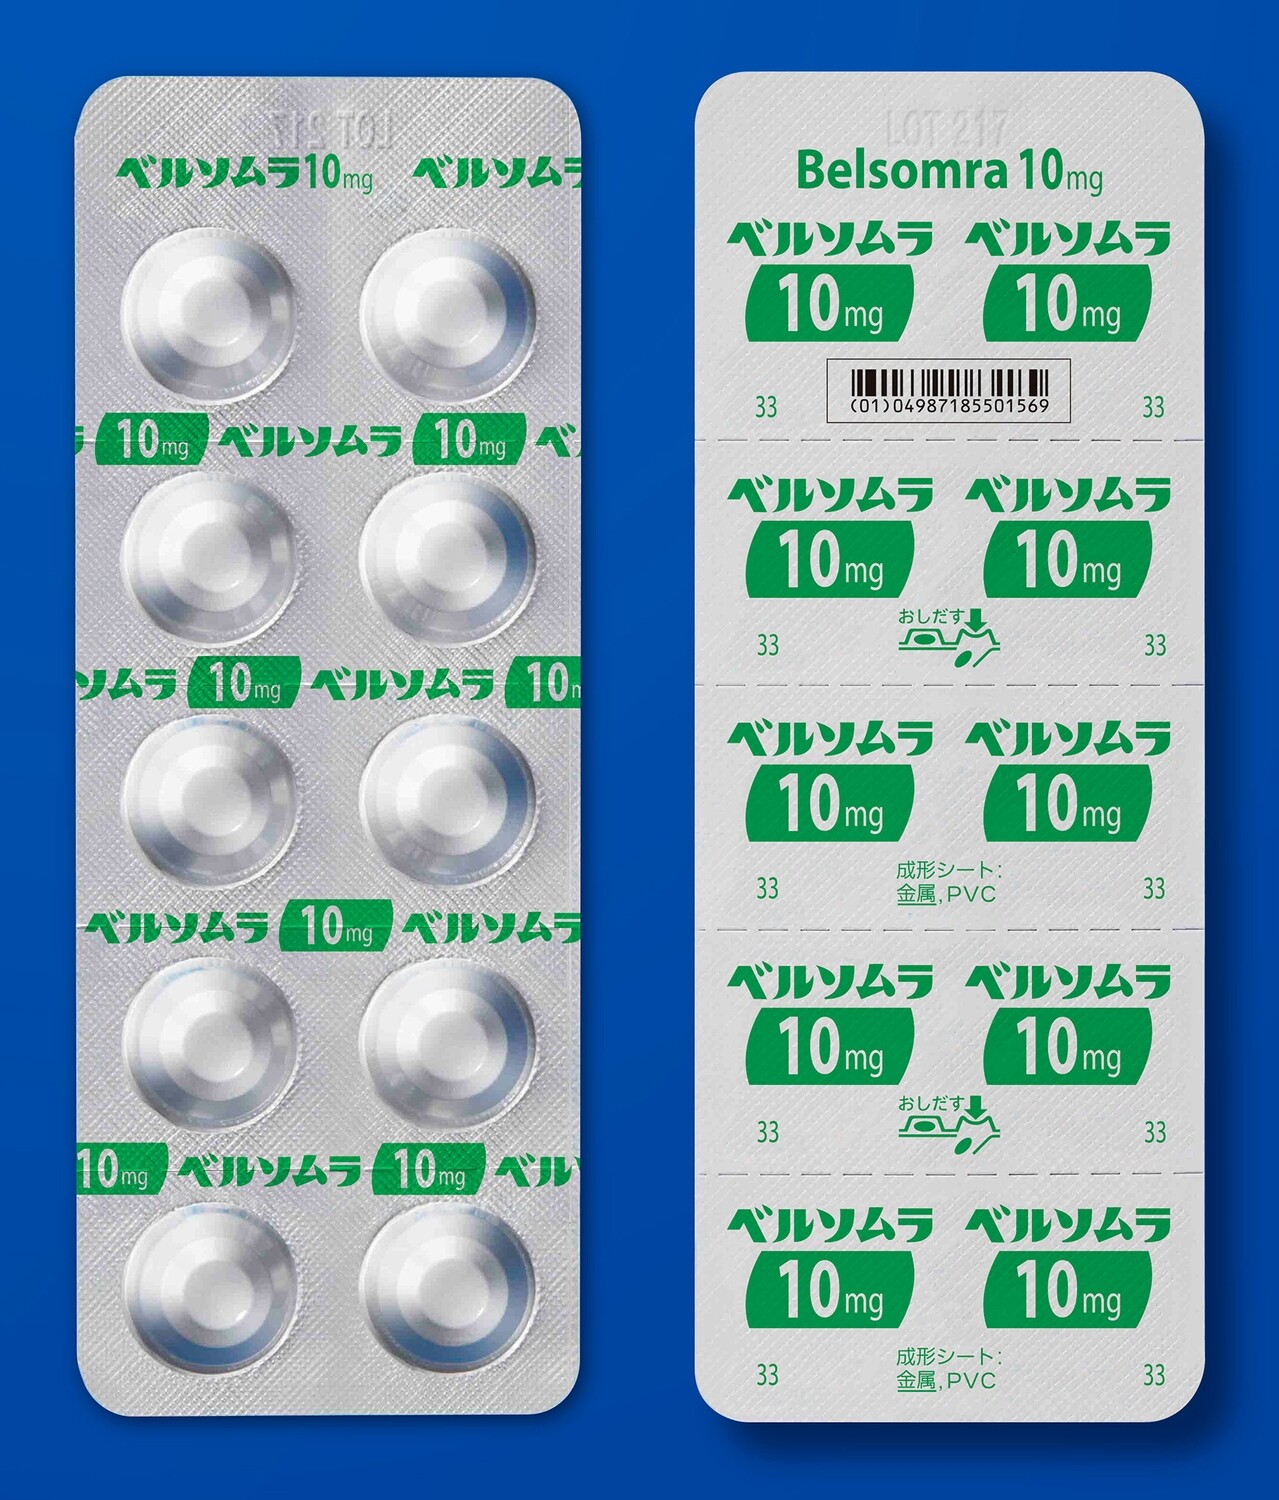 Belsomra Tablets 10mg